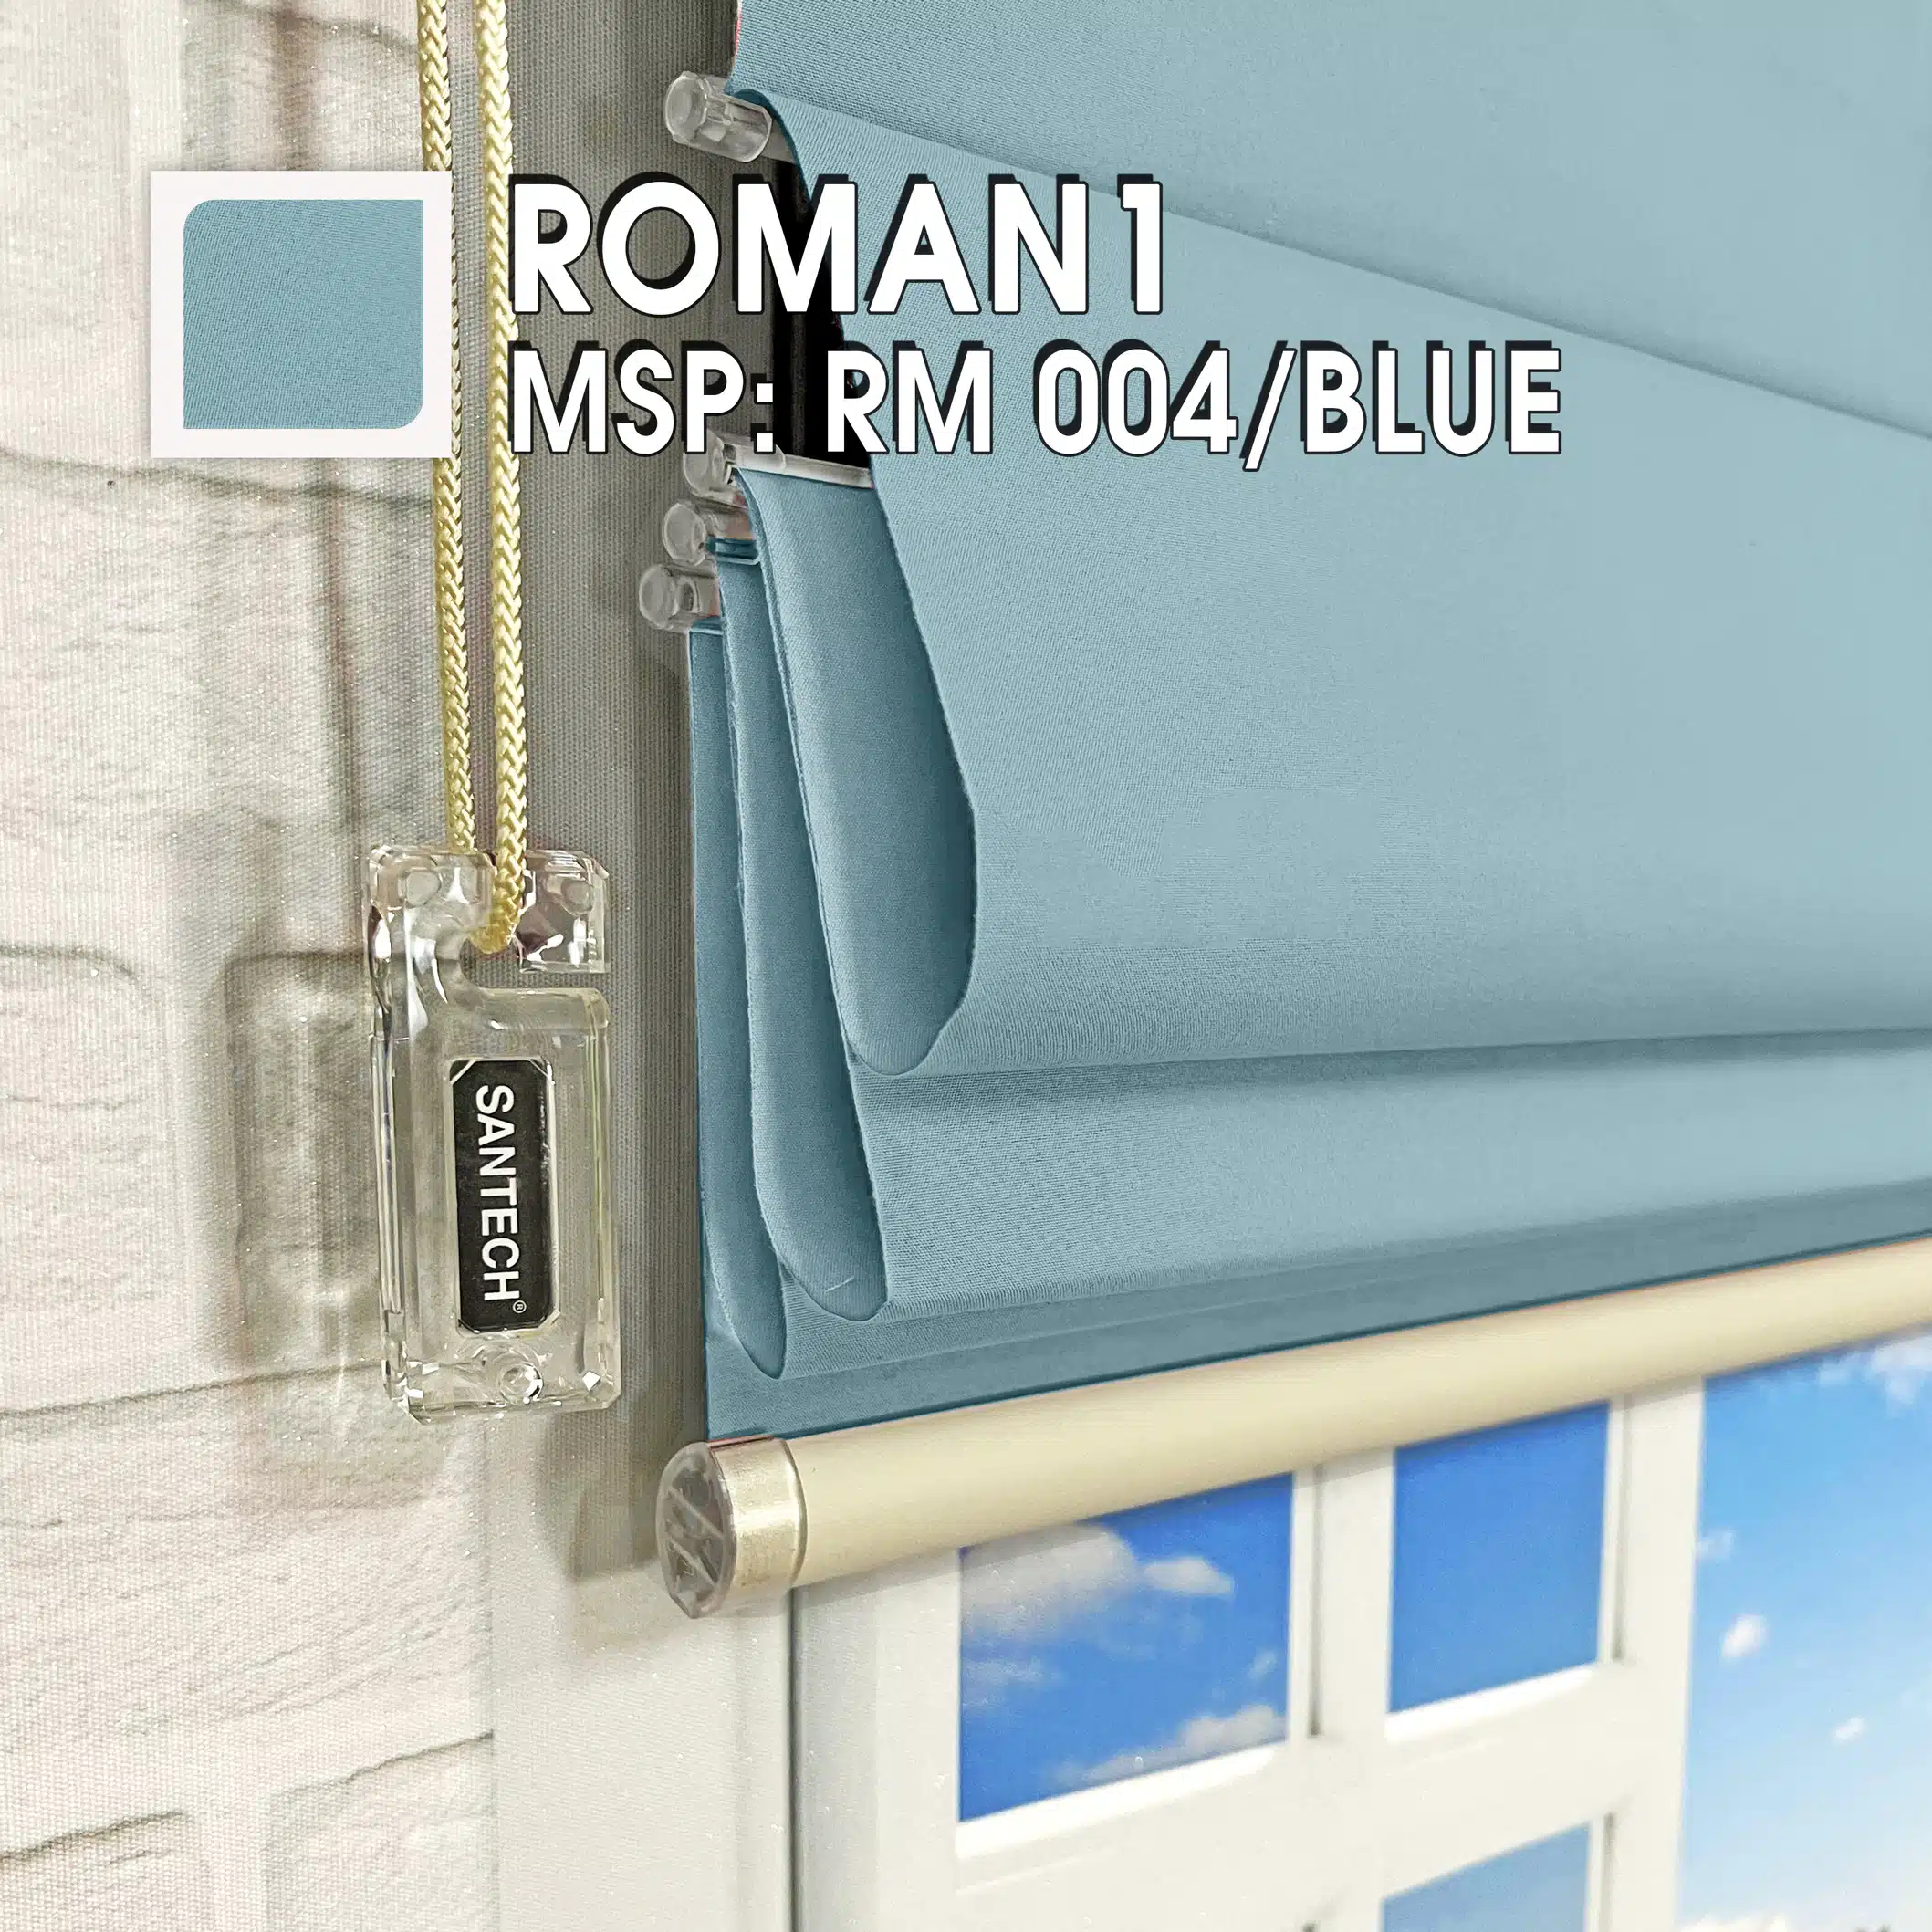 Roman1 Rm 004 